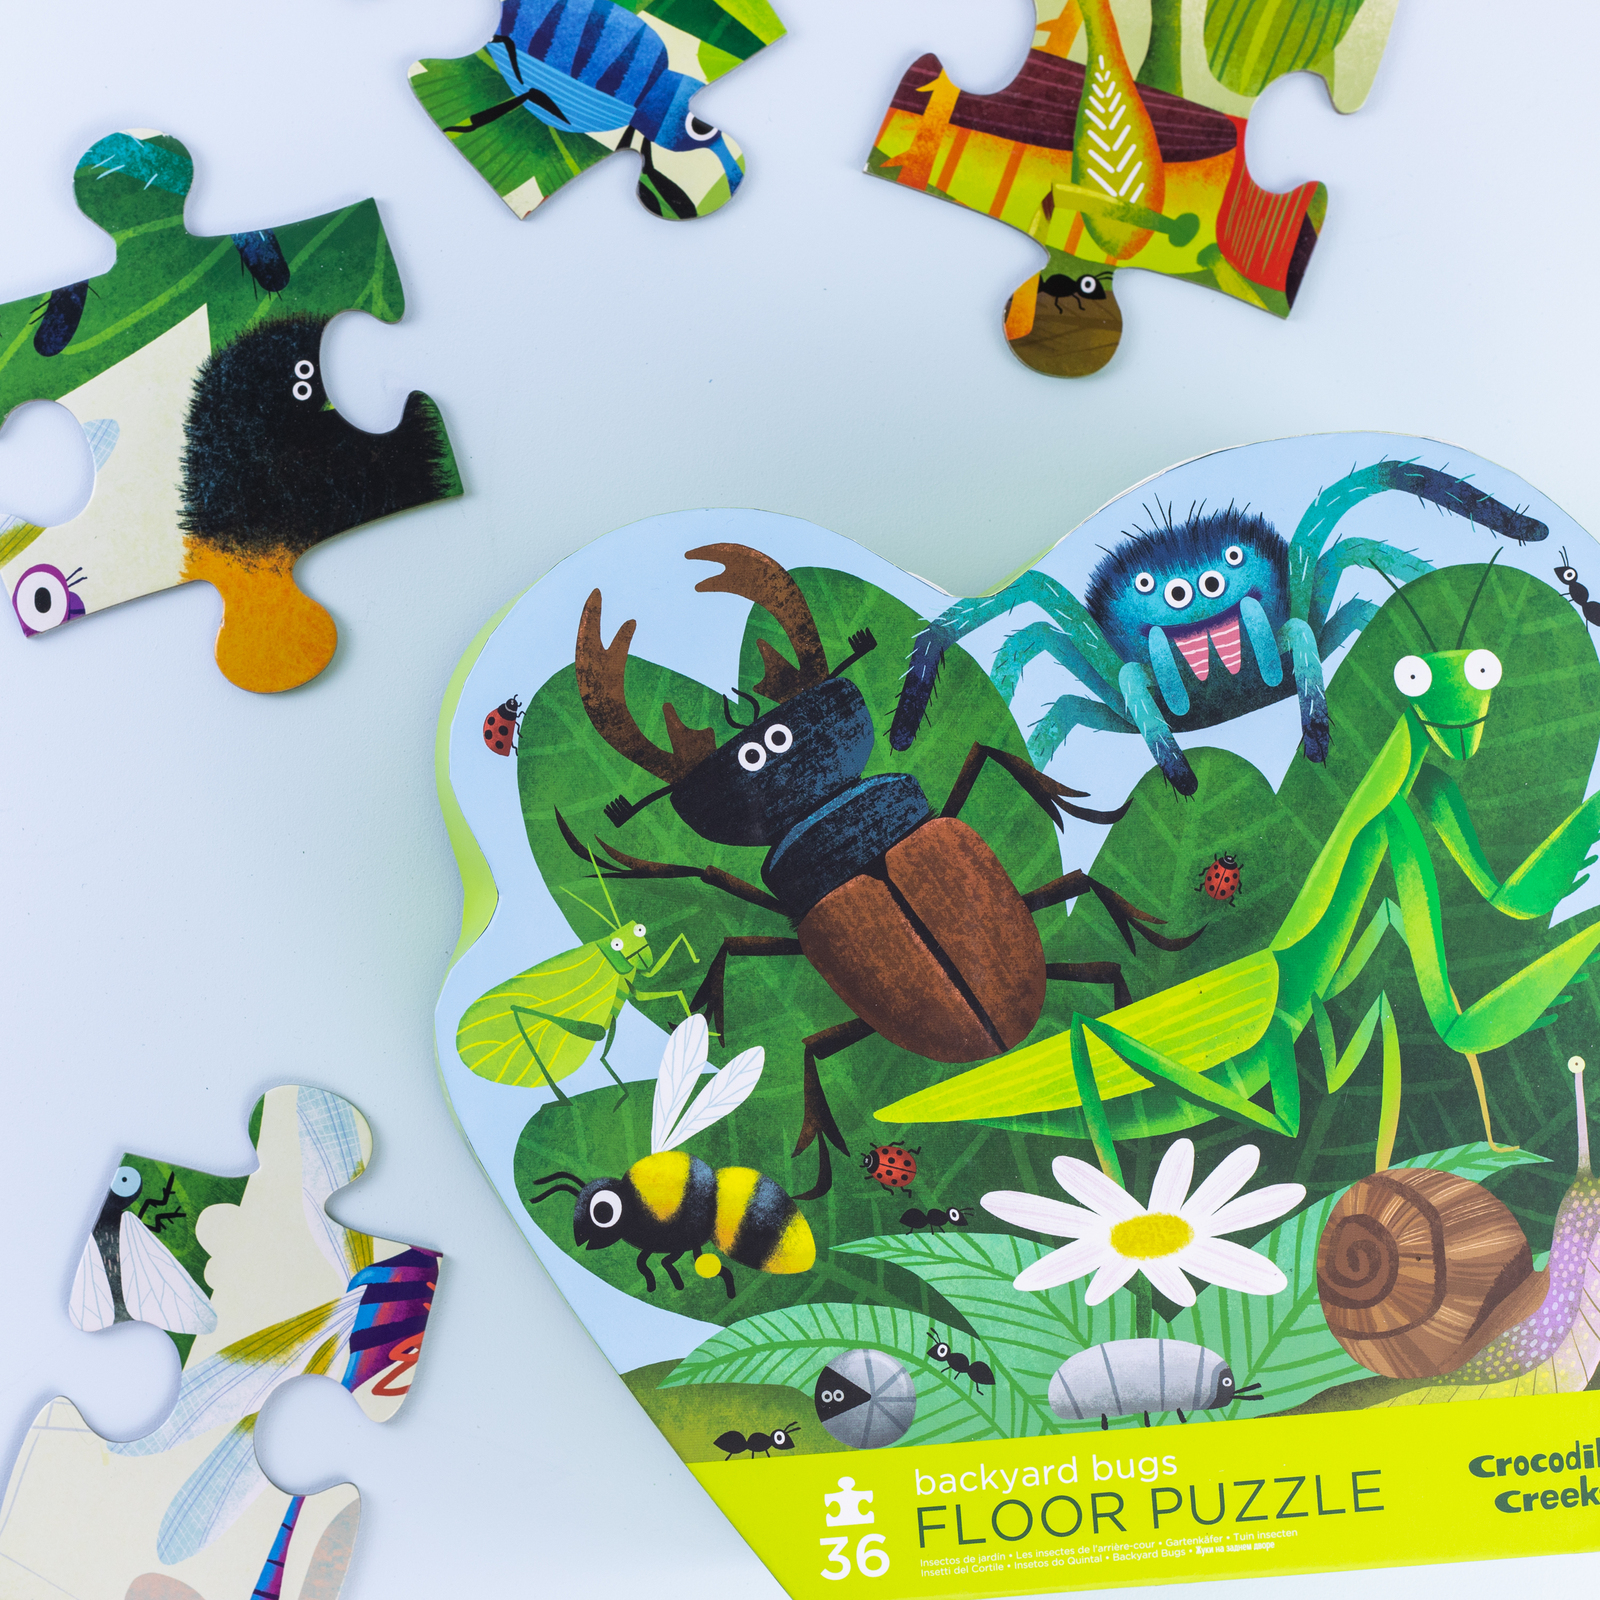 Crocodile Creek  Floor Puzzle 36 Piece | Backyard Bugs